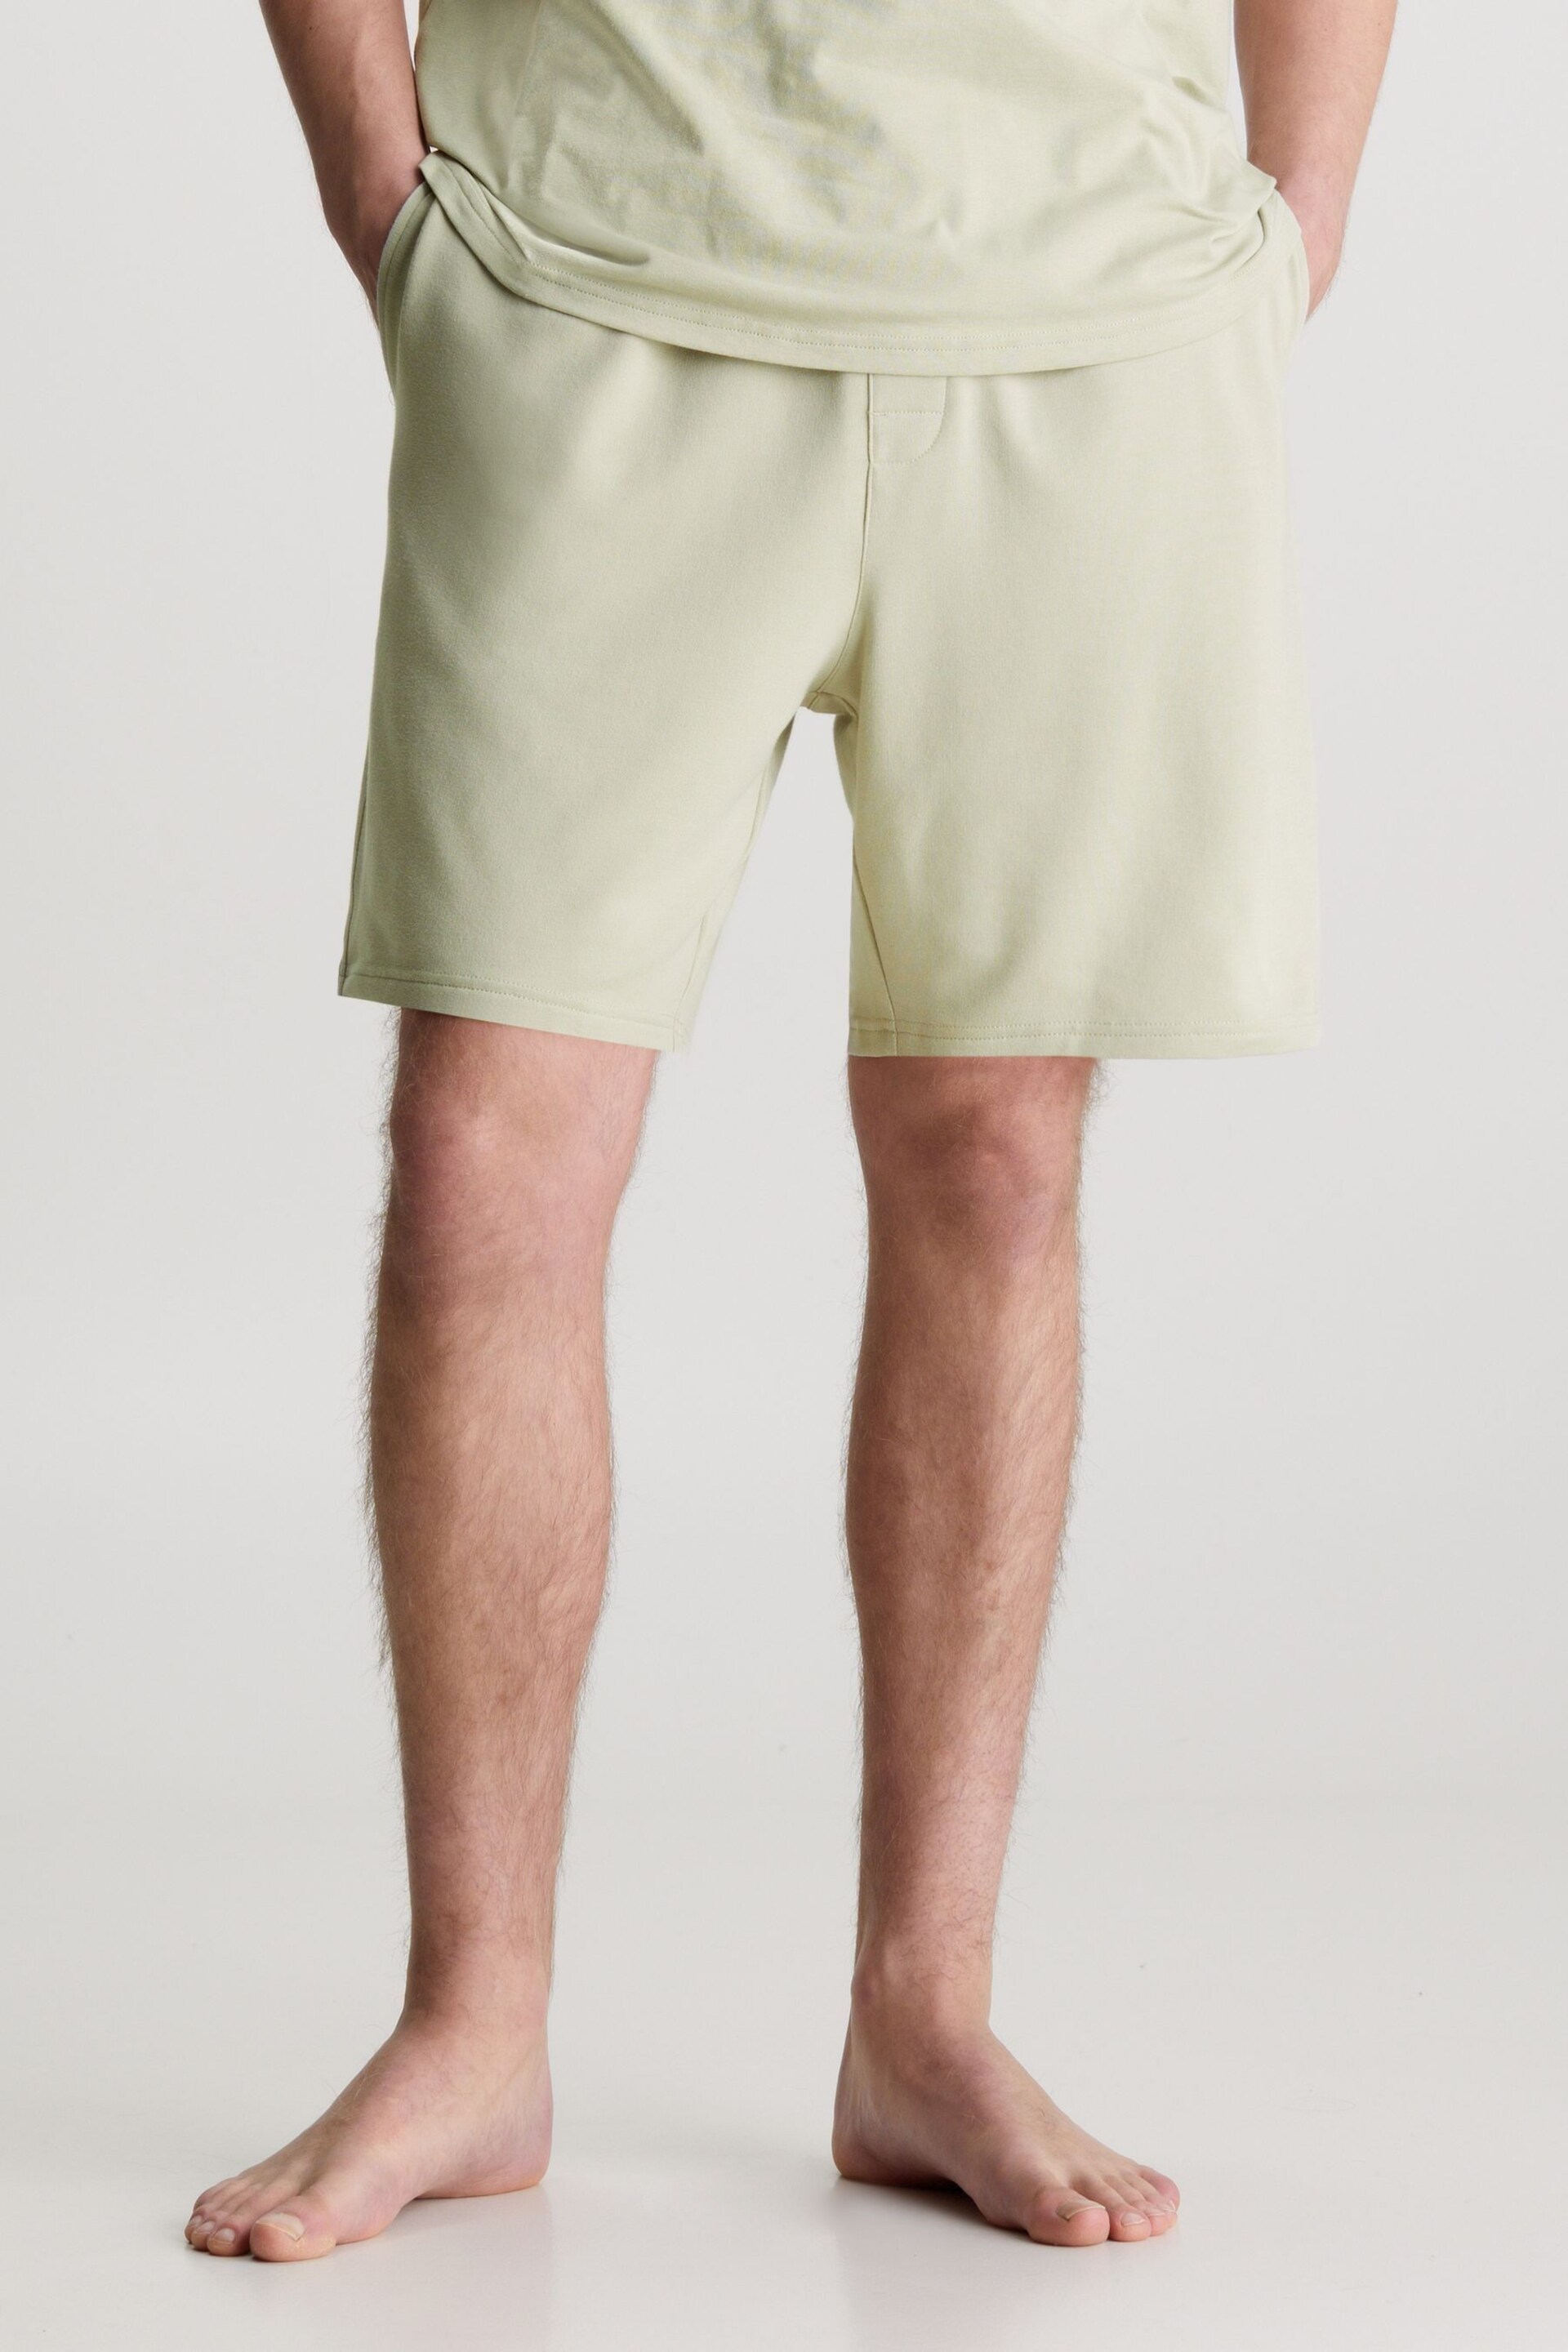 Calvin Klein Green Slogan Sleep Shorts - Image 1 of 4